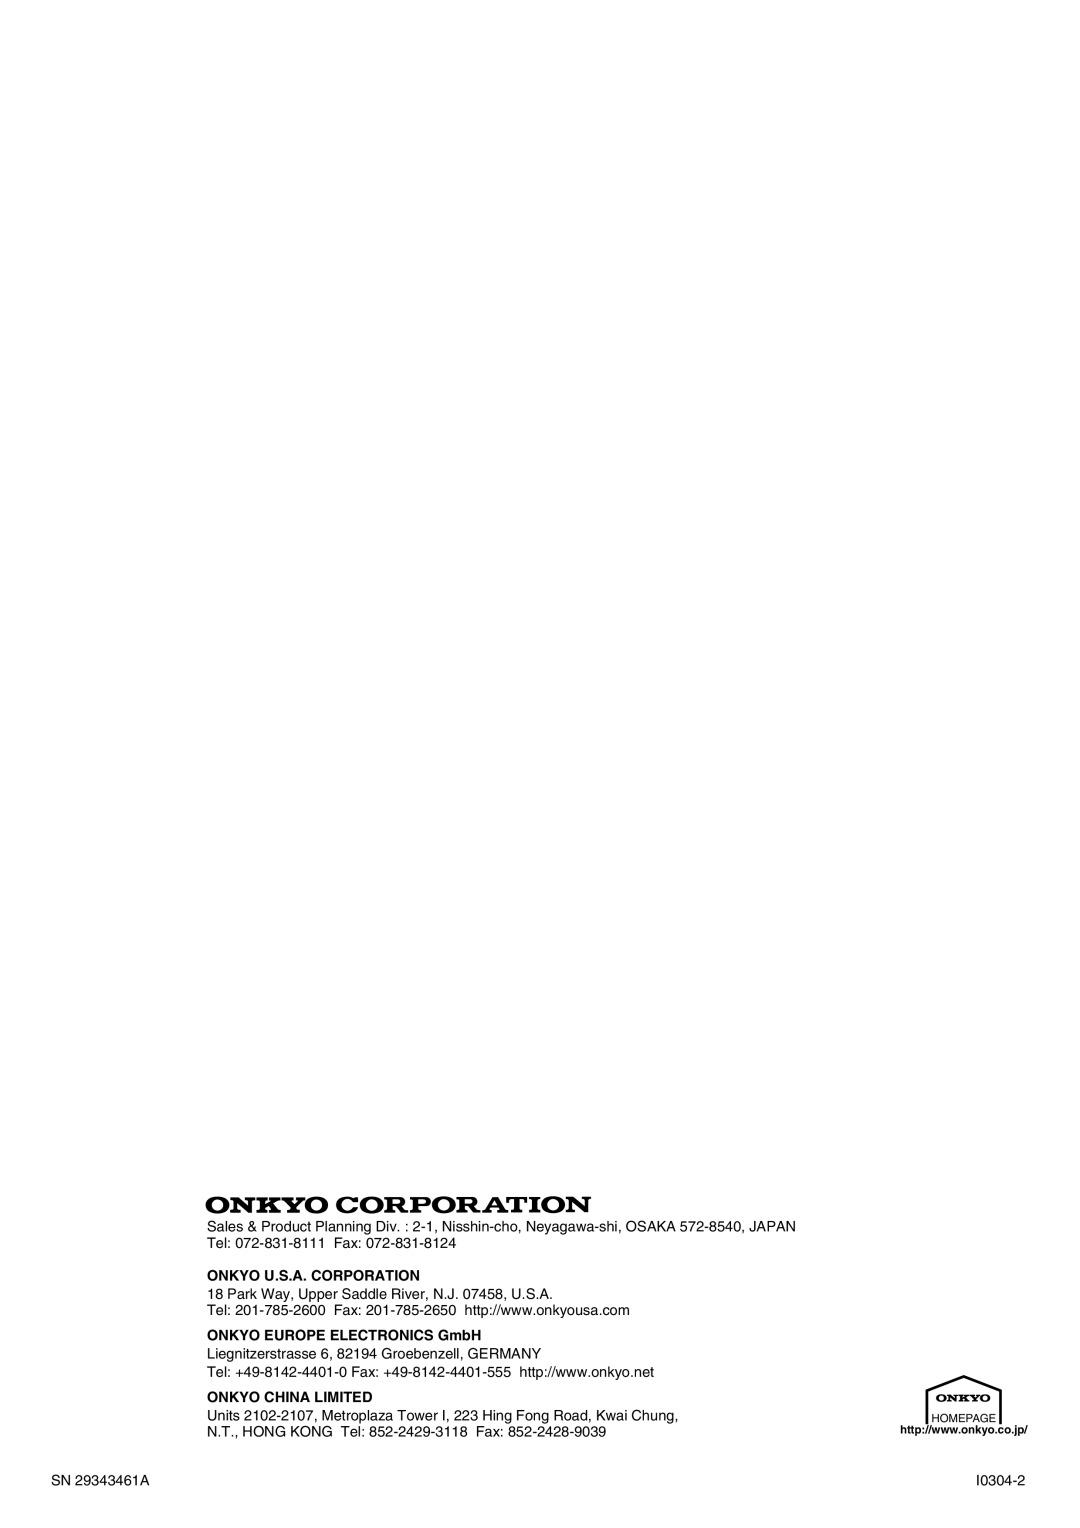 Onkyo DV-CP701 instruction manual Onkyo U.S.A. Corporation, ONKYO EUROPE ELECTRONICS GmbH, Onkyo China Limited 